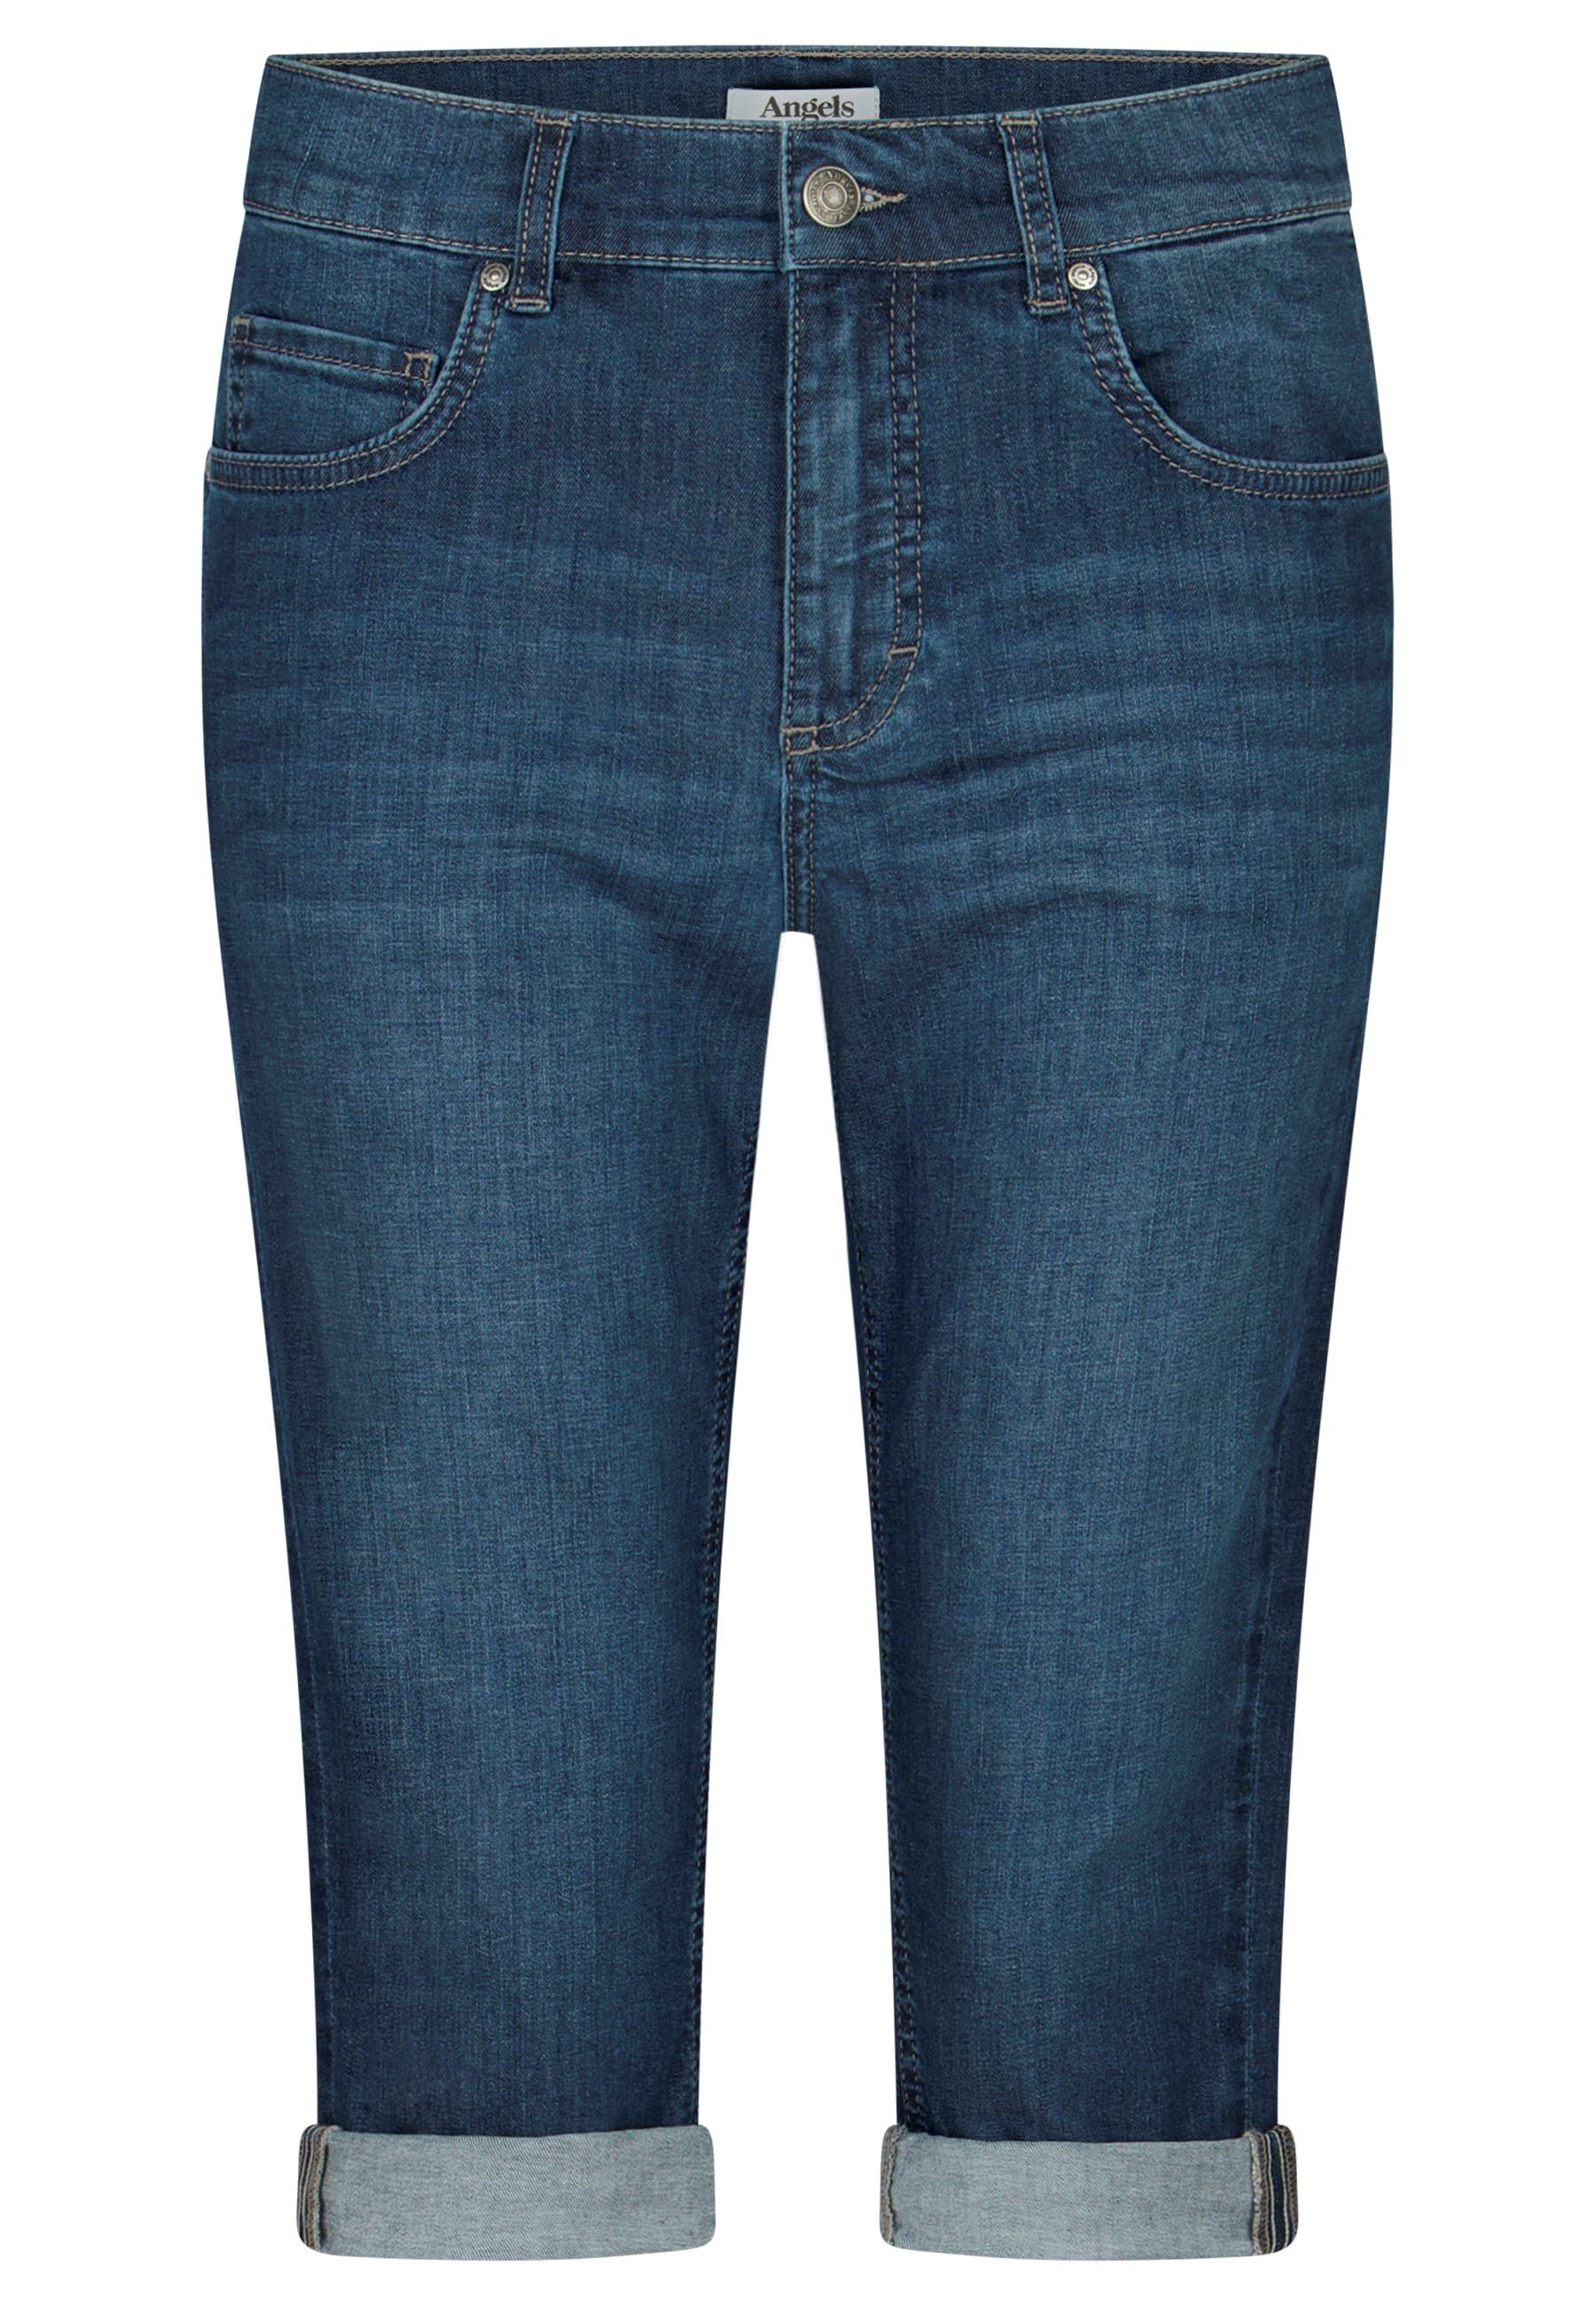 mit Capri TU blue Jeans Used-Look Label-Applikationen mit ANGELS 5-Pocket-Jeans